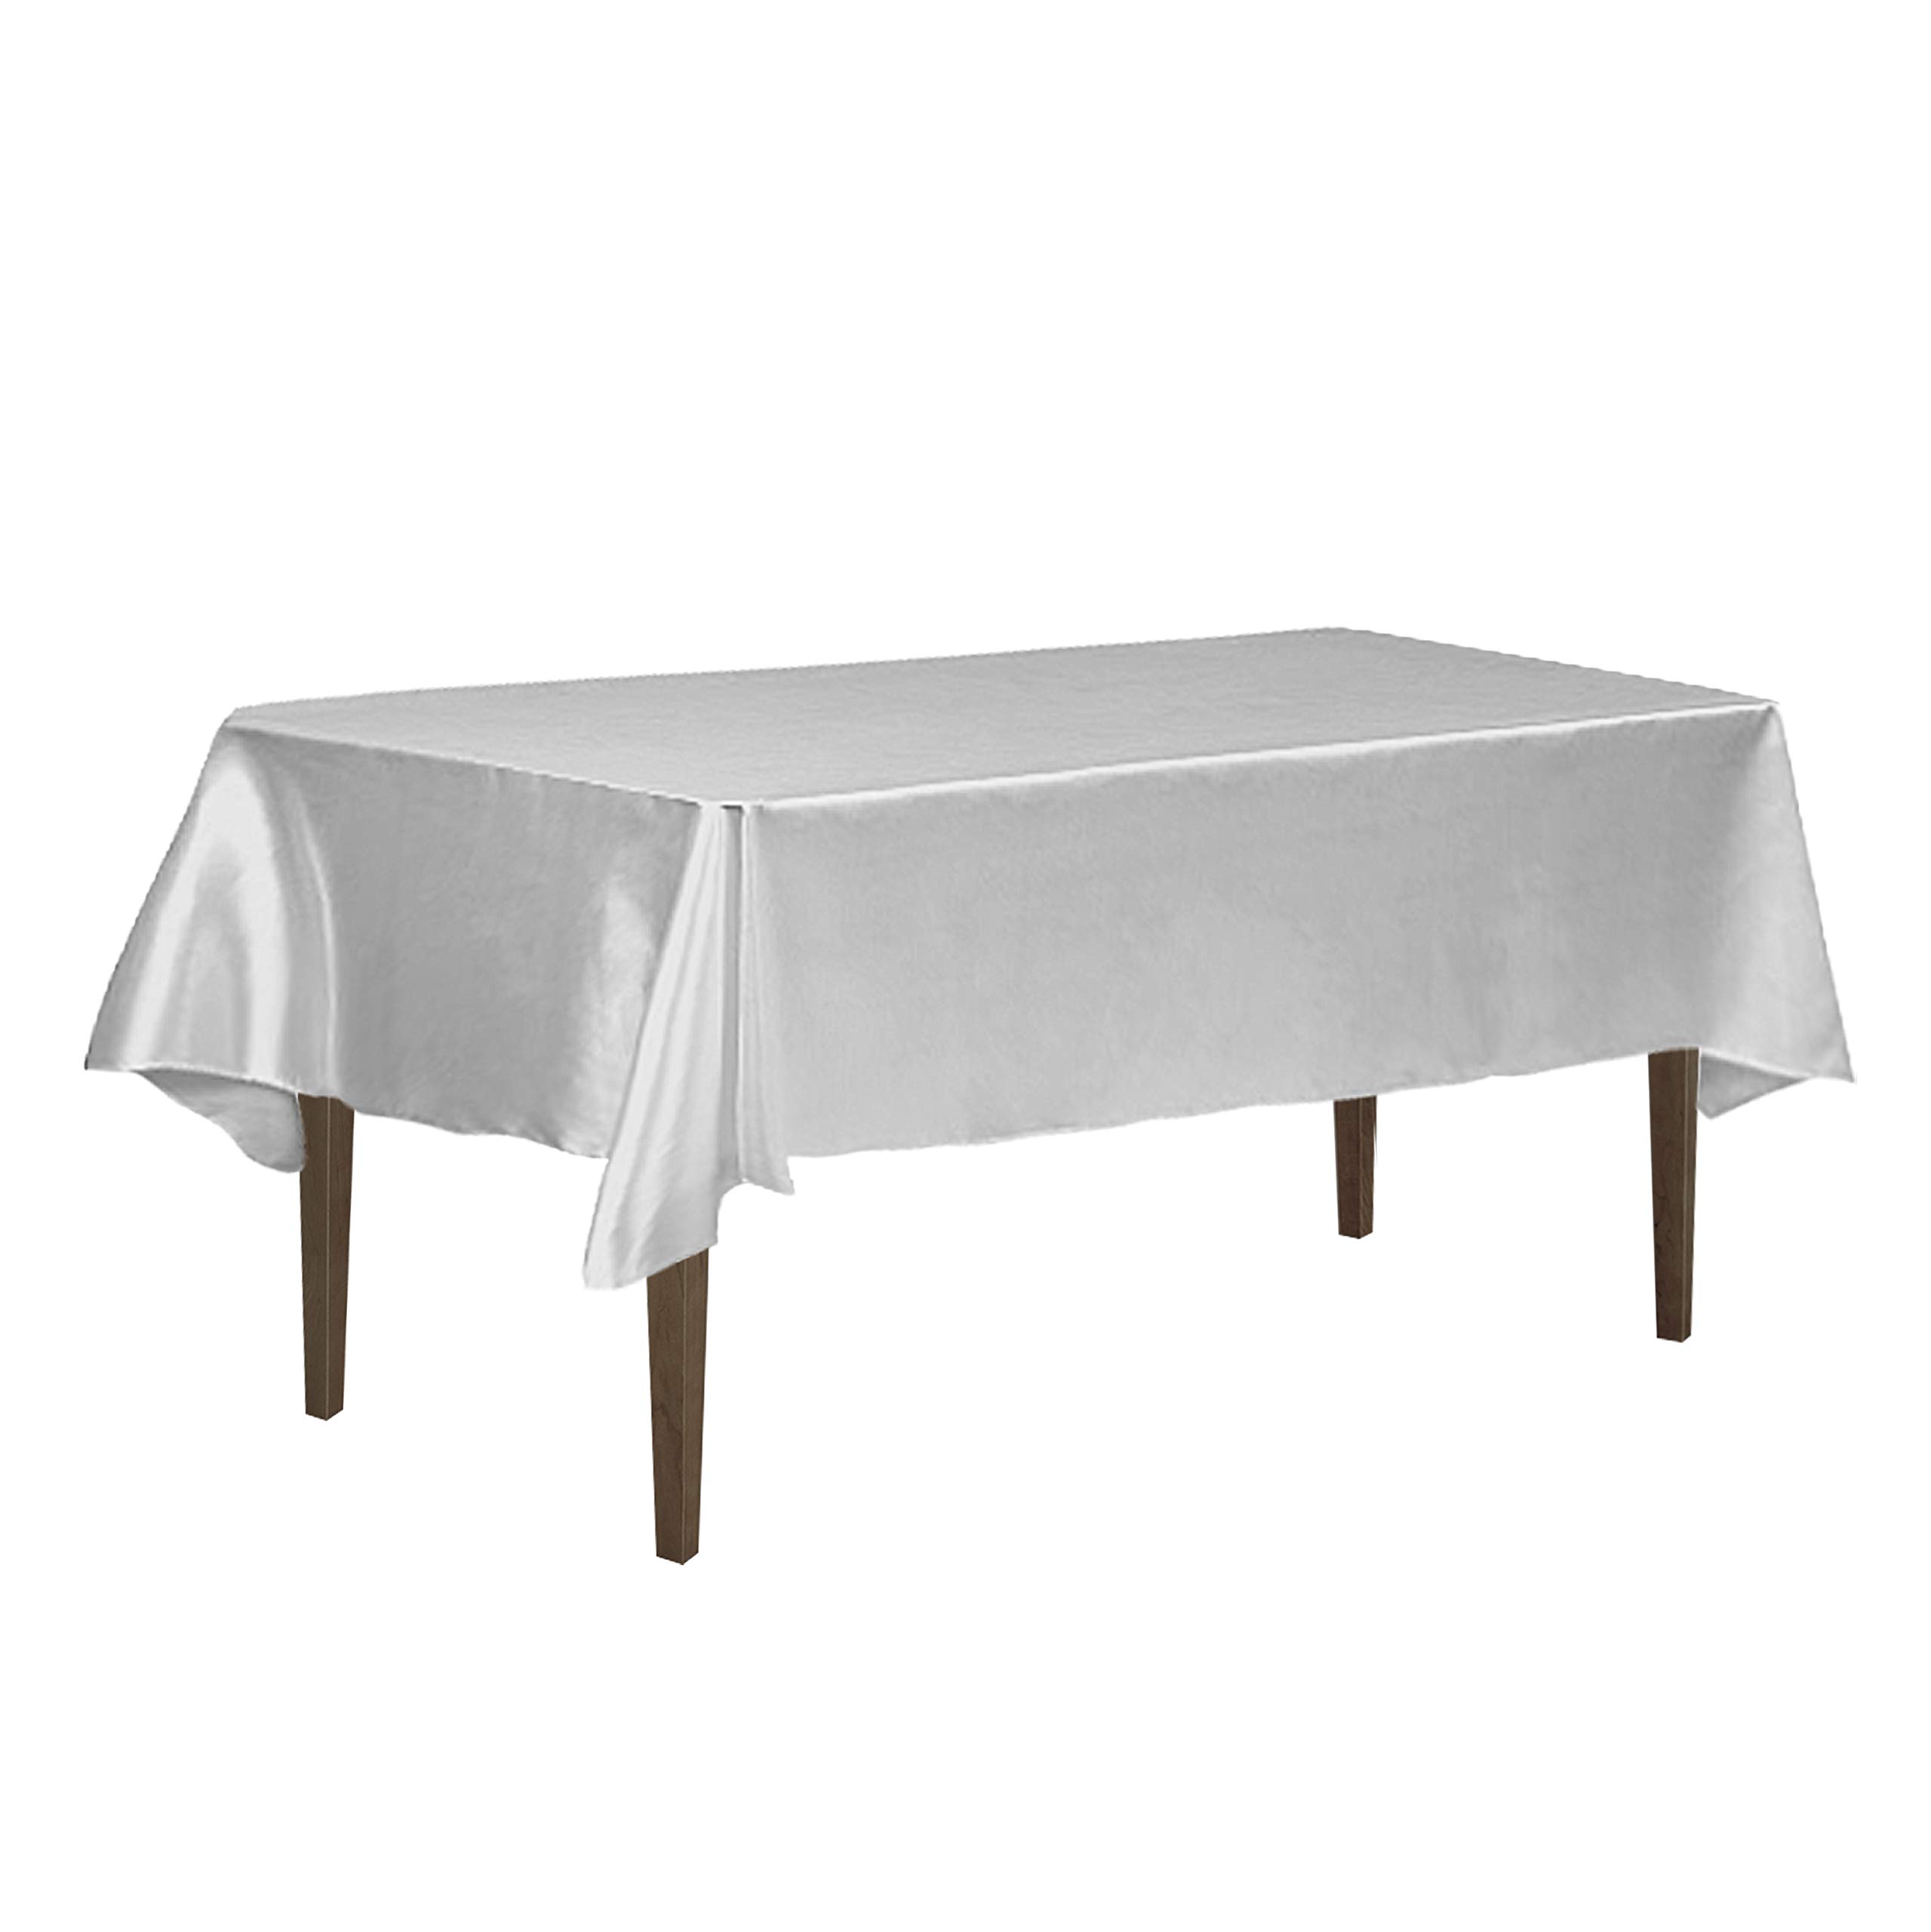 LTC LINENS LinenTablecloth 60 x 102-Inch Rectangular Satin Tablecloth Silver